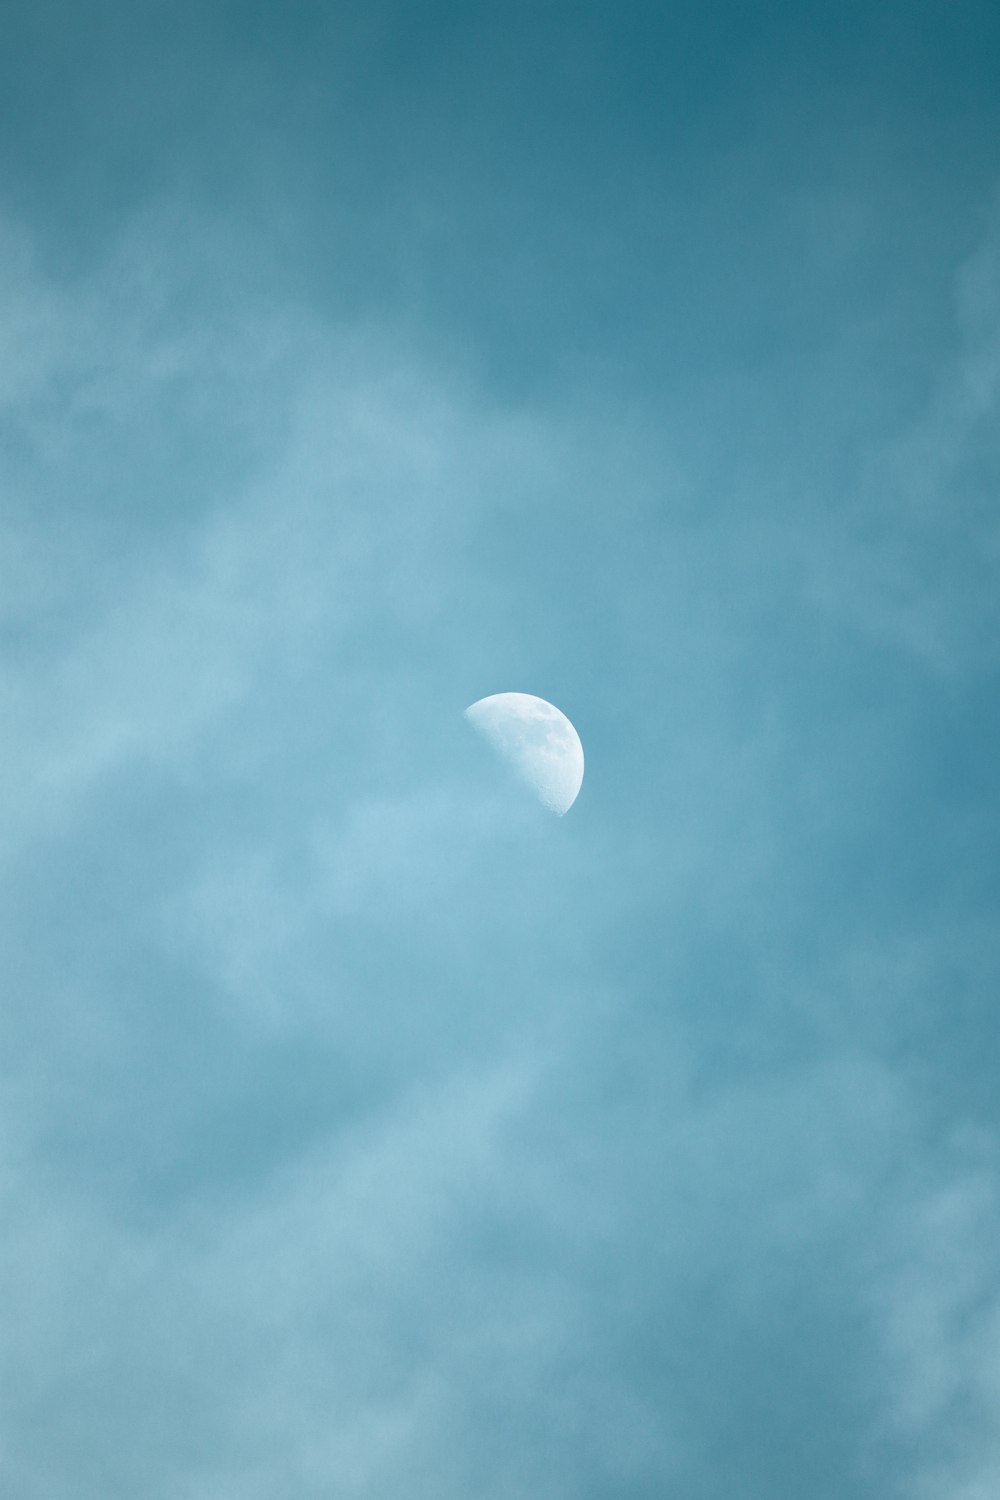 luna bianca nel cielo blu